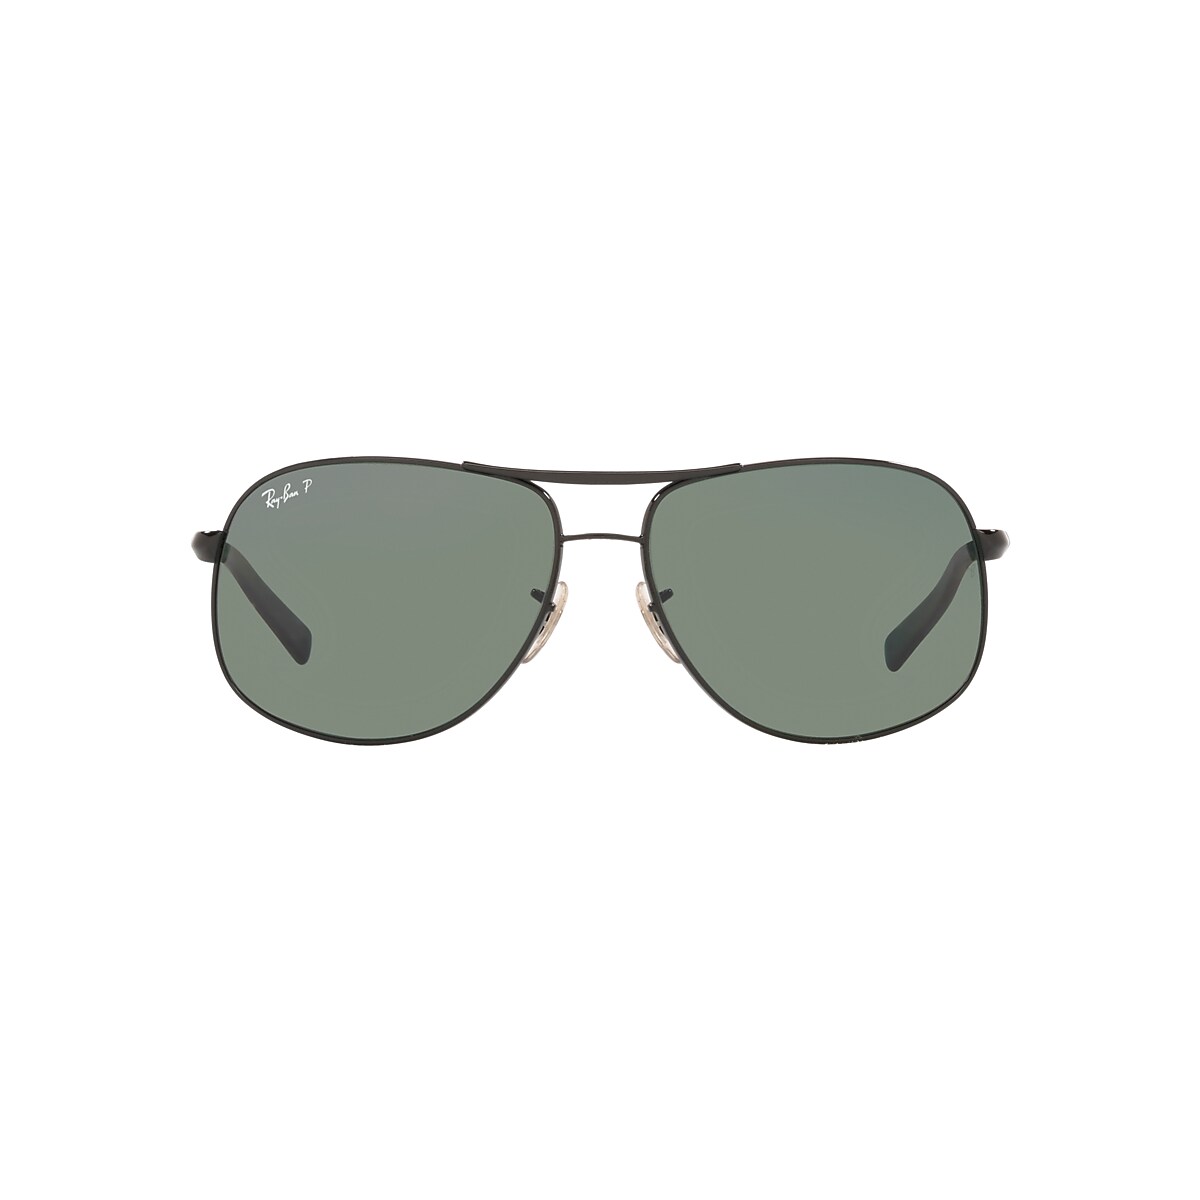 Ray-Ban RB3387 64 Green & Black Polarized Sunglasses | Sunglass Hut USA